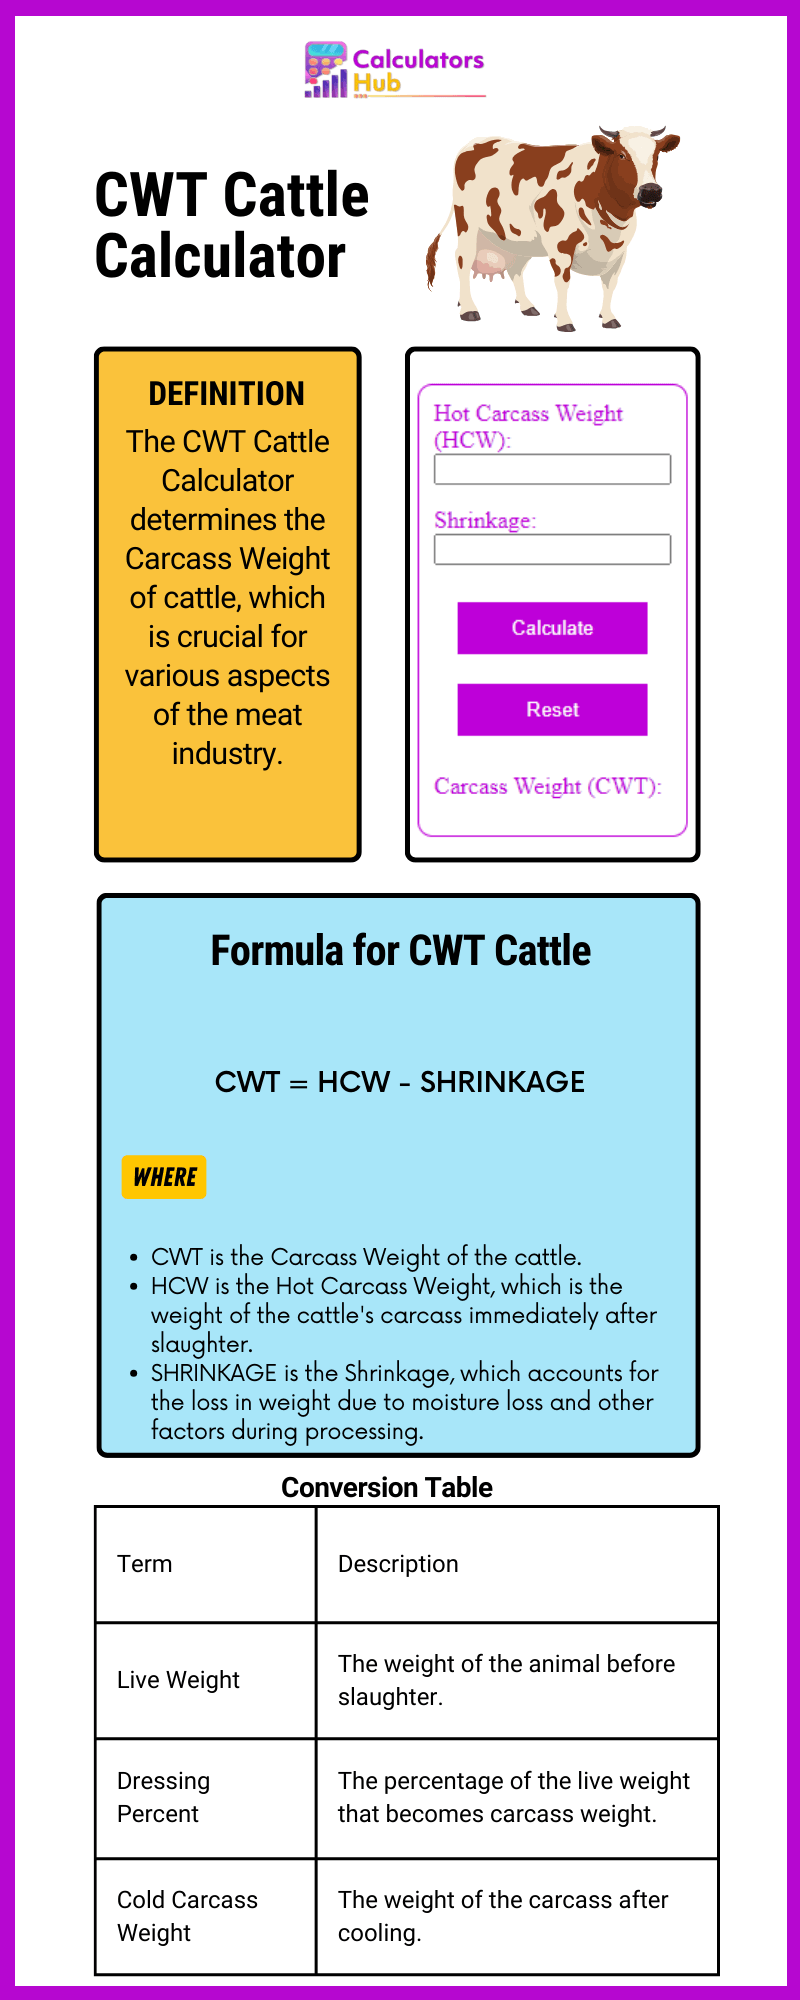 CWT Cattle Calculator